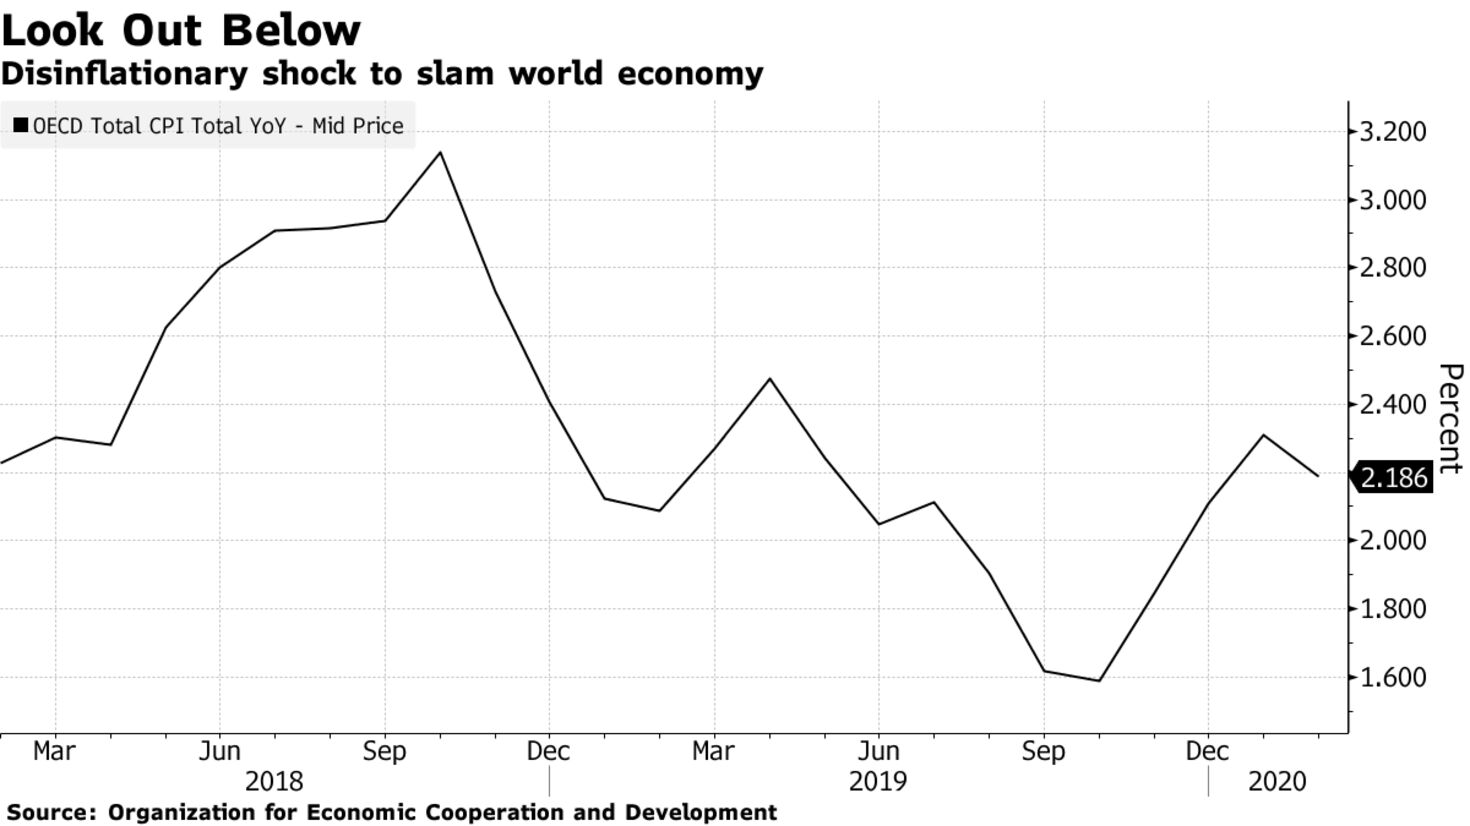 Disinflationary shock to slam world economy